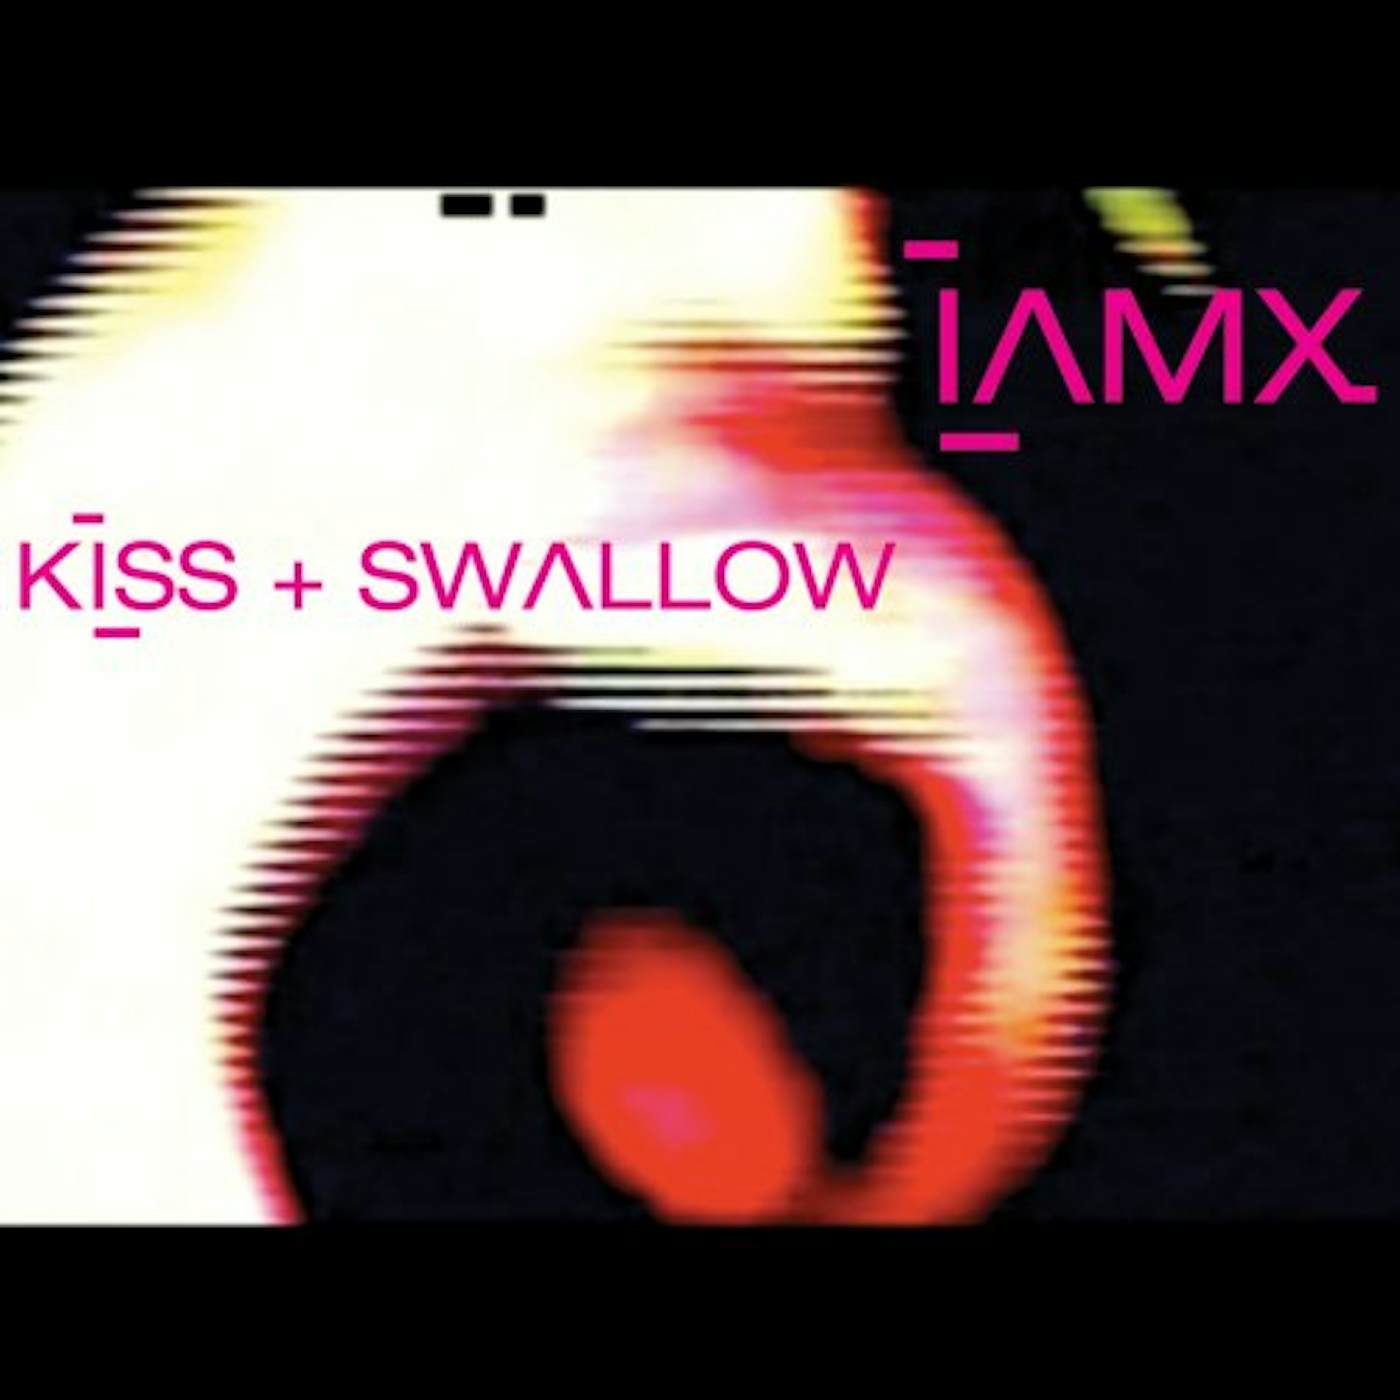 IAMX KISS + SWALLOW CD